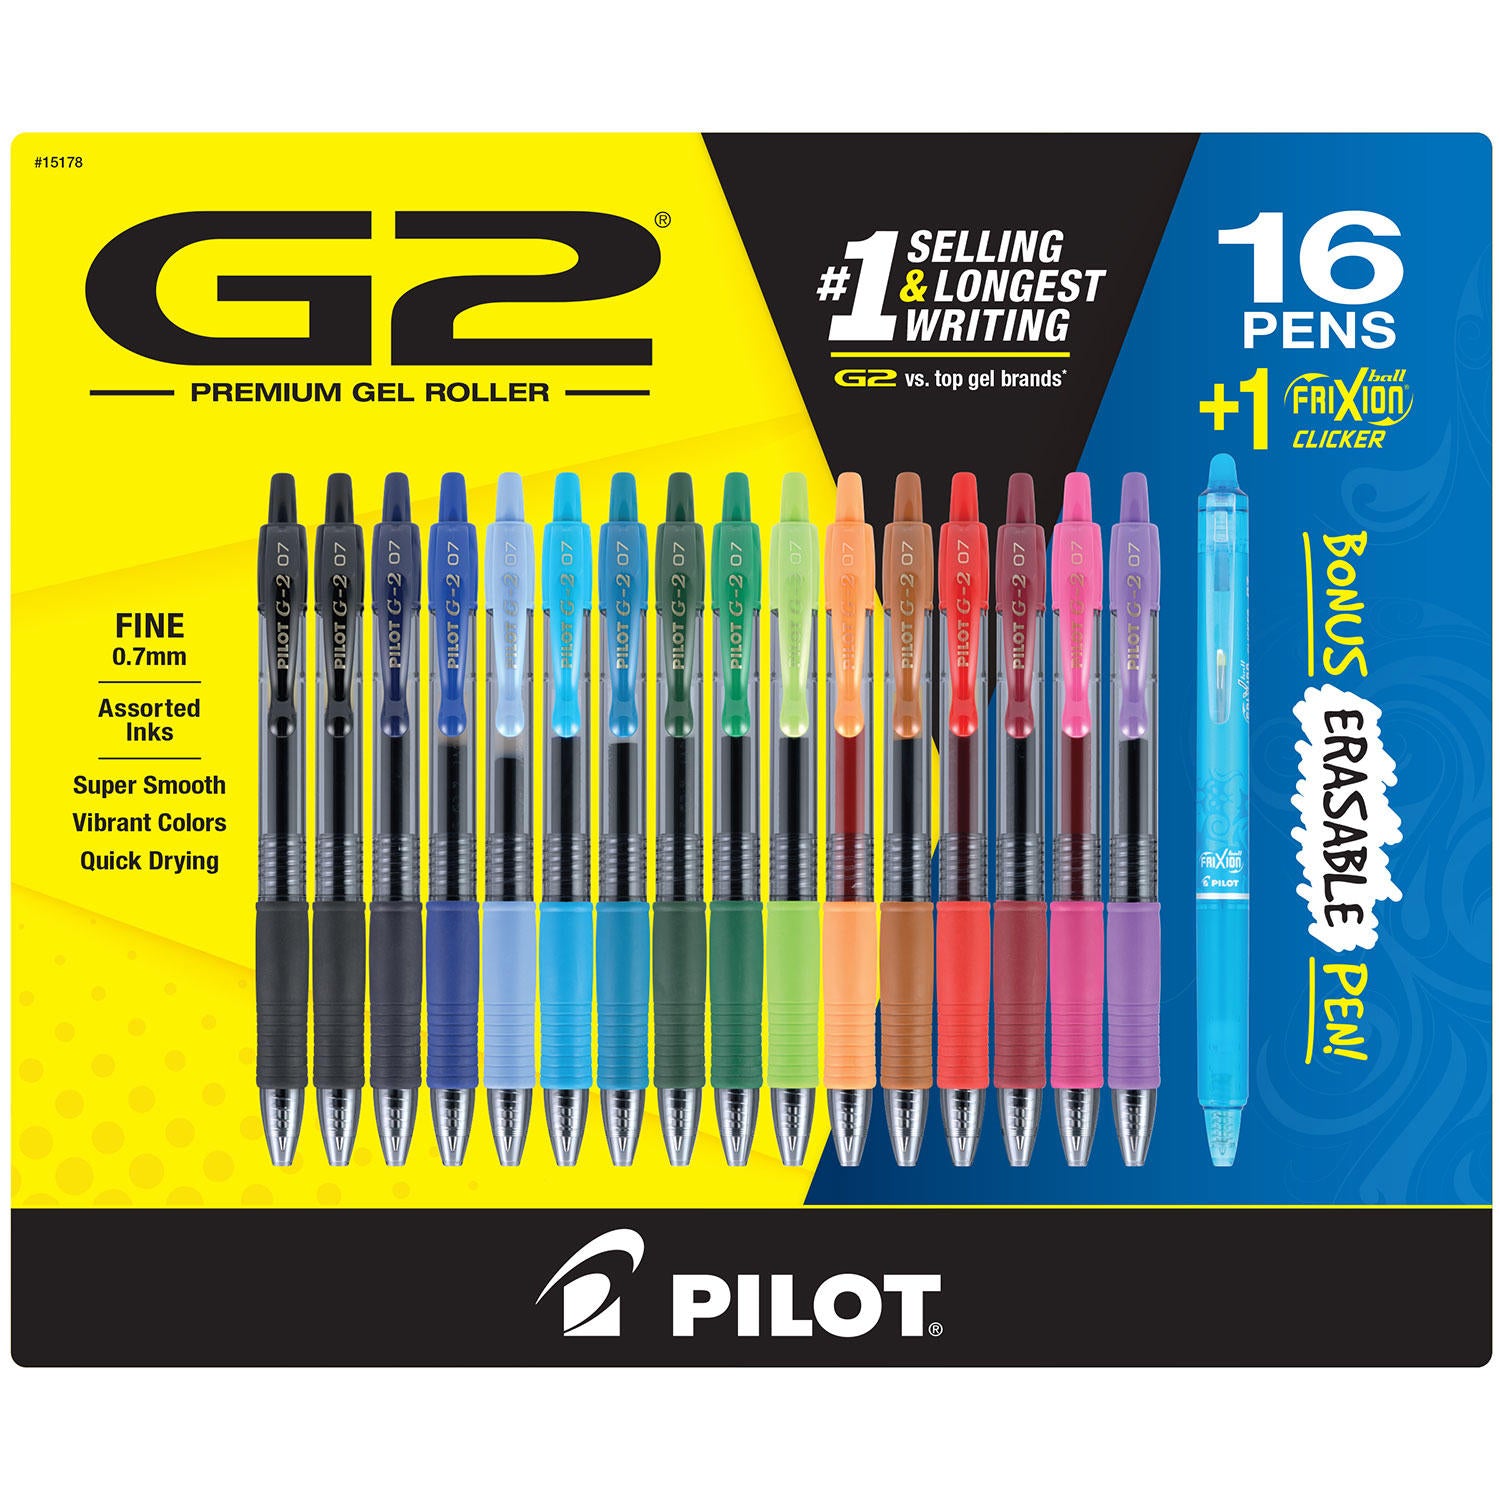 Pilot G2 Pens, Premium Gel Roller, Fine Point, Black Ink - 5 pens